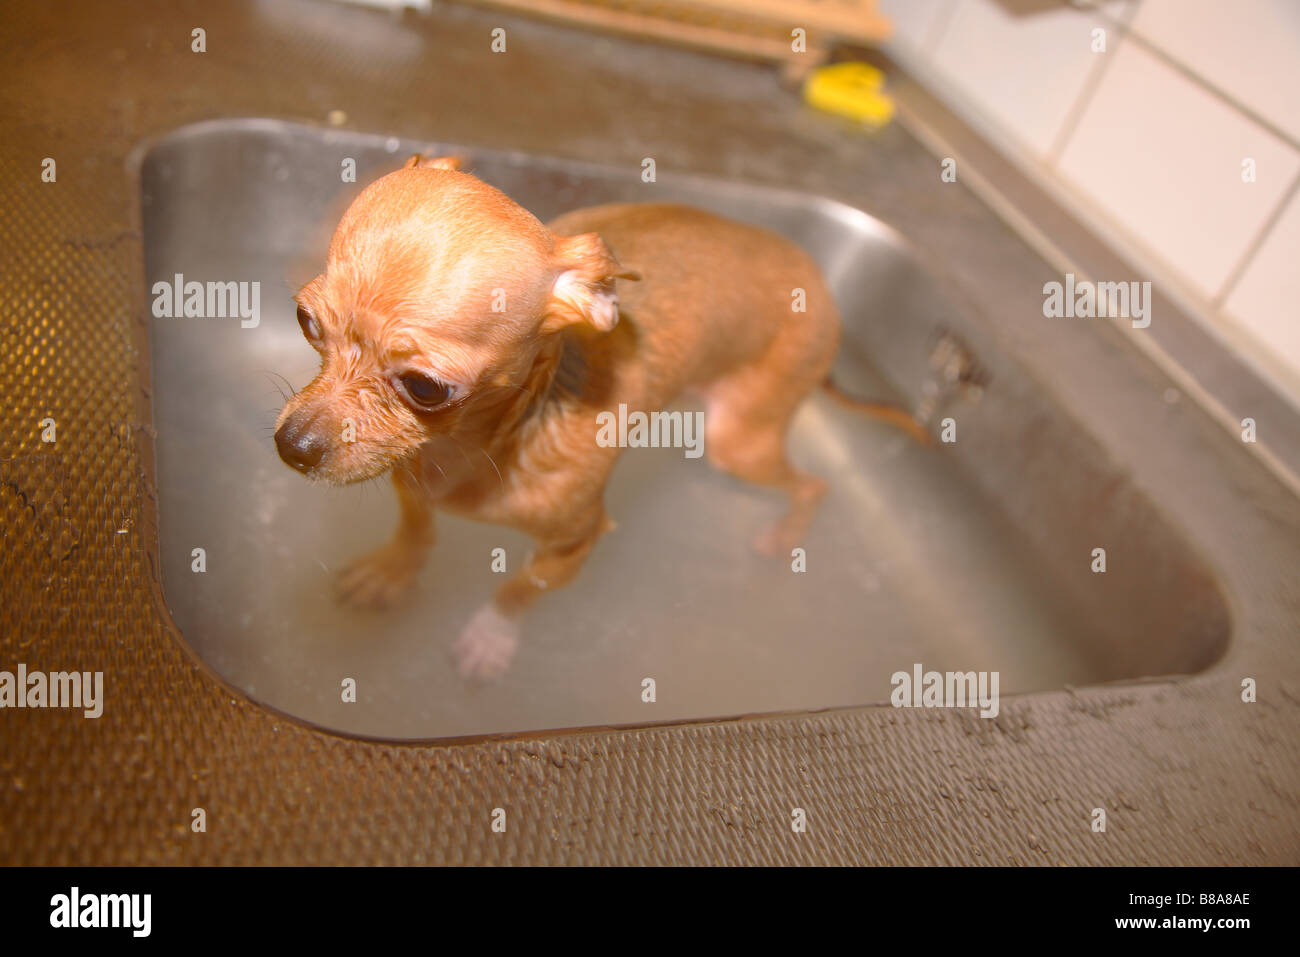 Reinigung Waschen Hund Chihuahua chiwawa Stockfoto